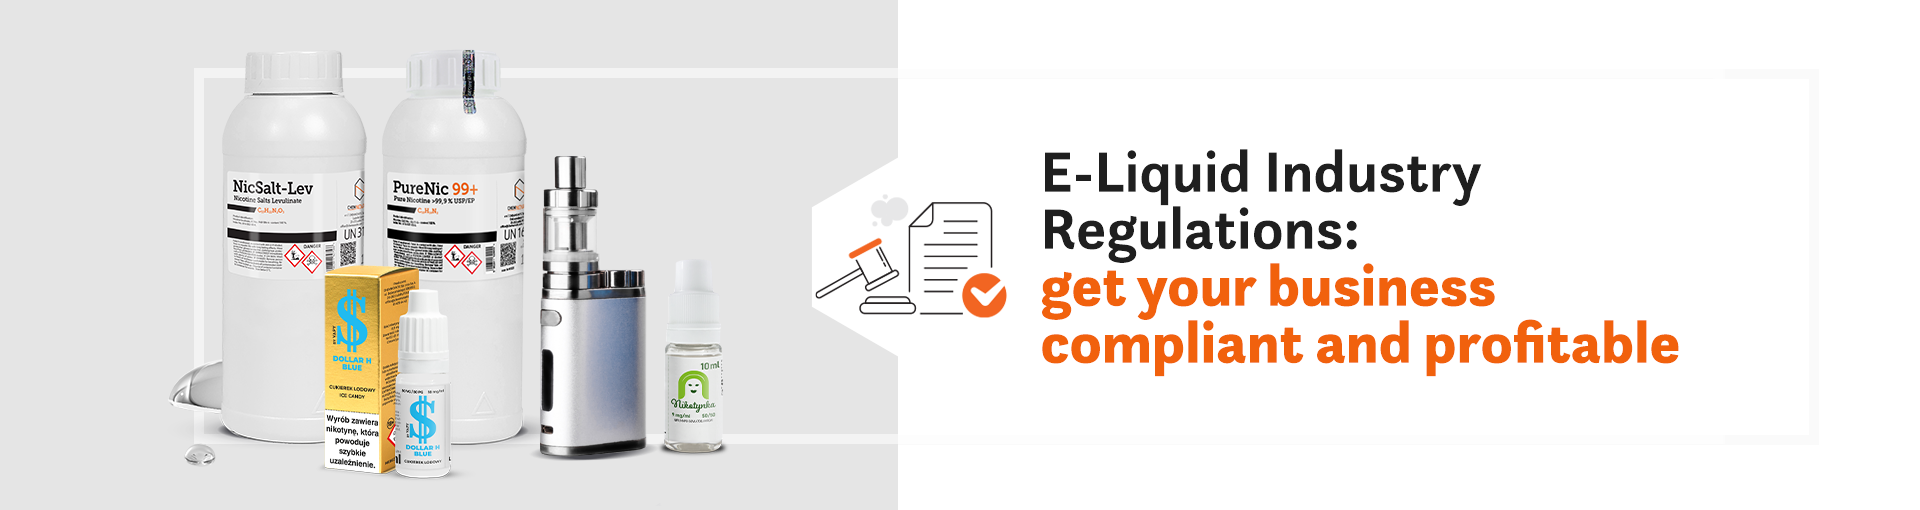 e-liquid industry regulations